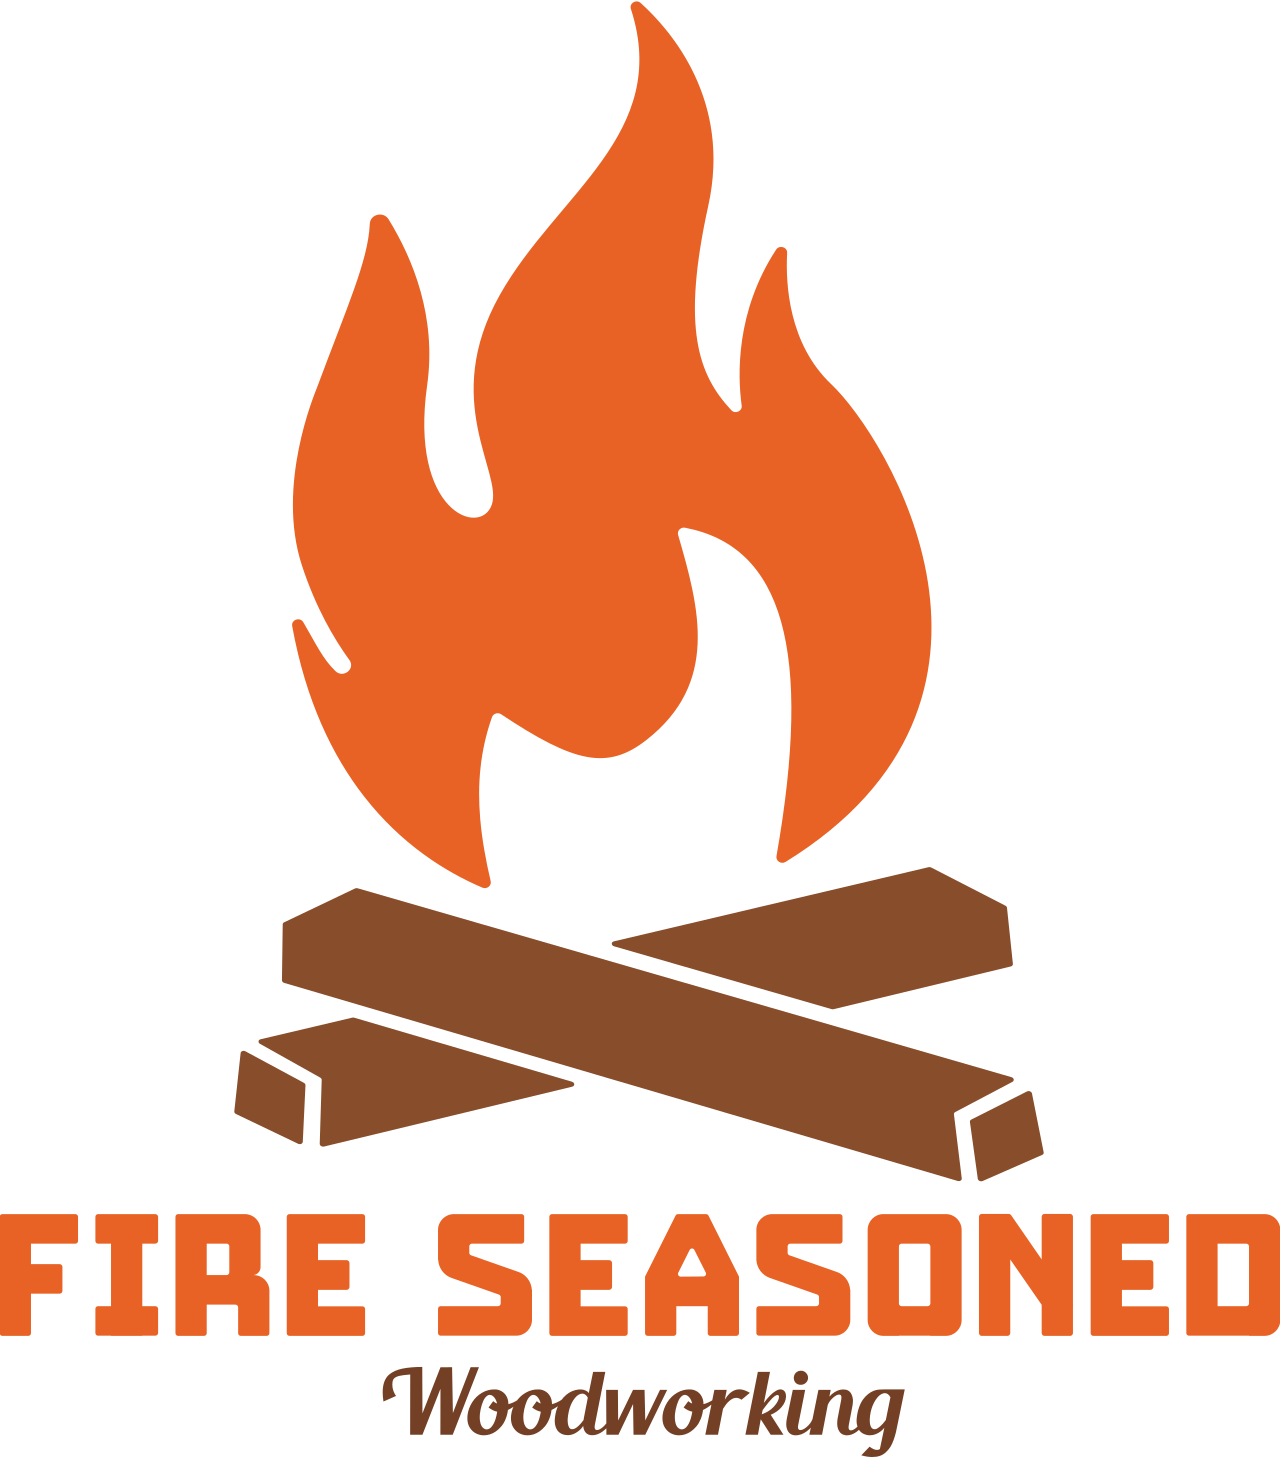 Fire Seasoned Woodworking's web page